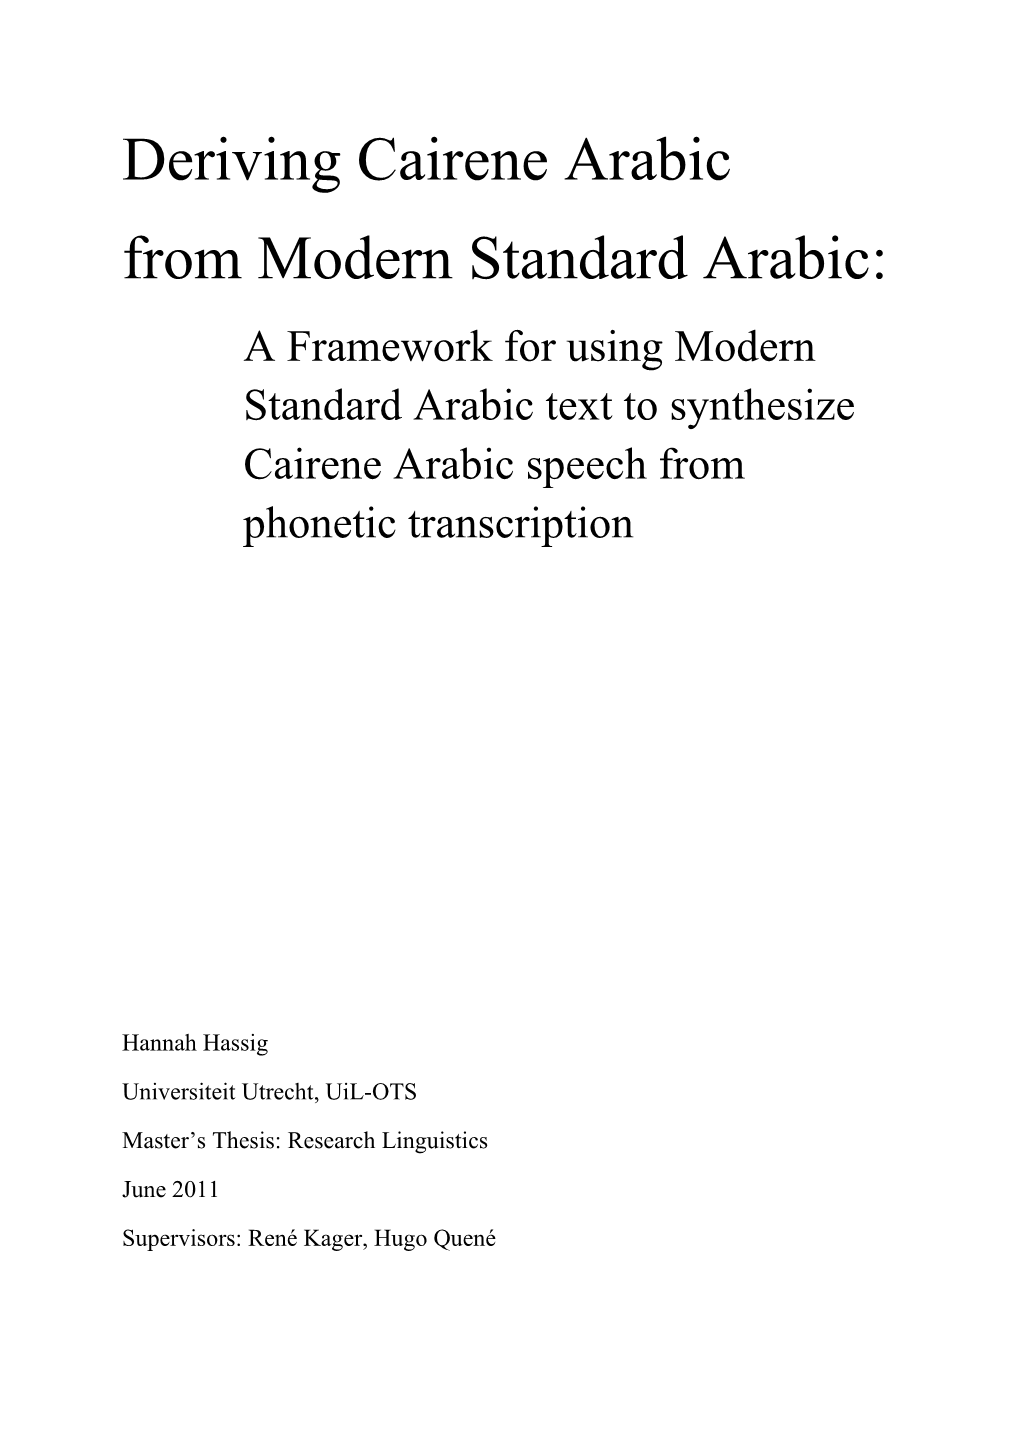 Deriving Cairene Arabic from Modern Standard Arabic